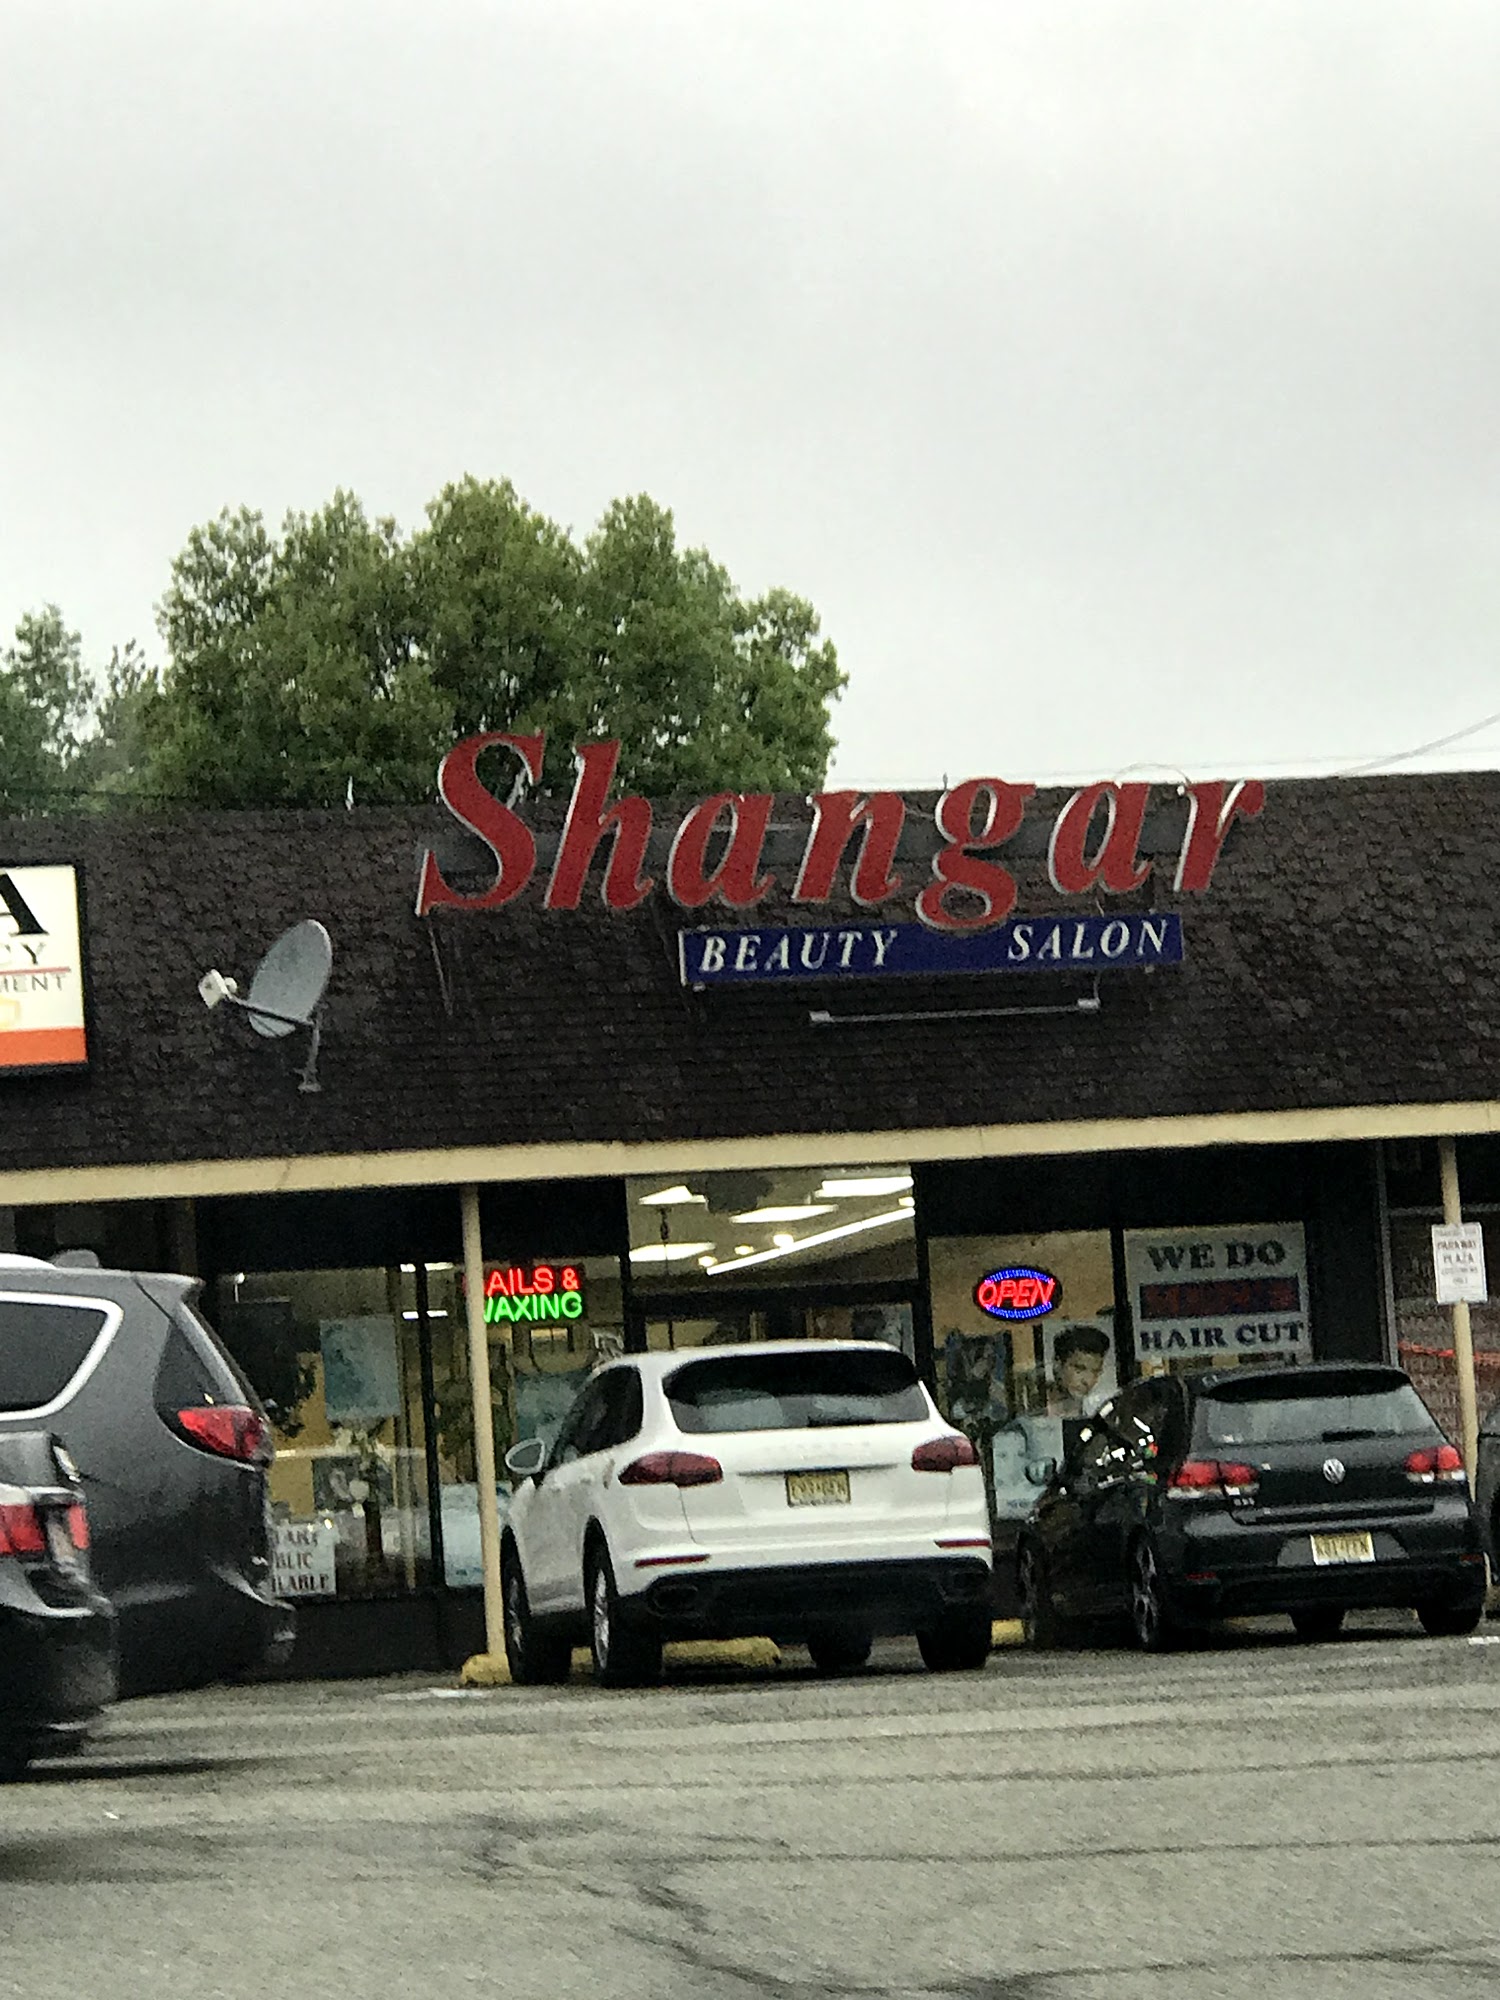 Shangar Beauty Salon